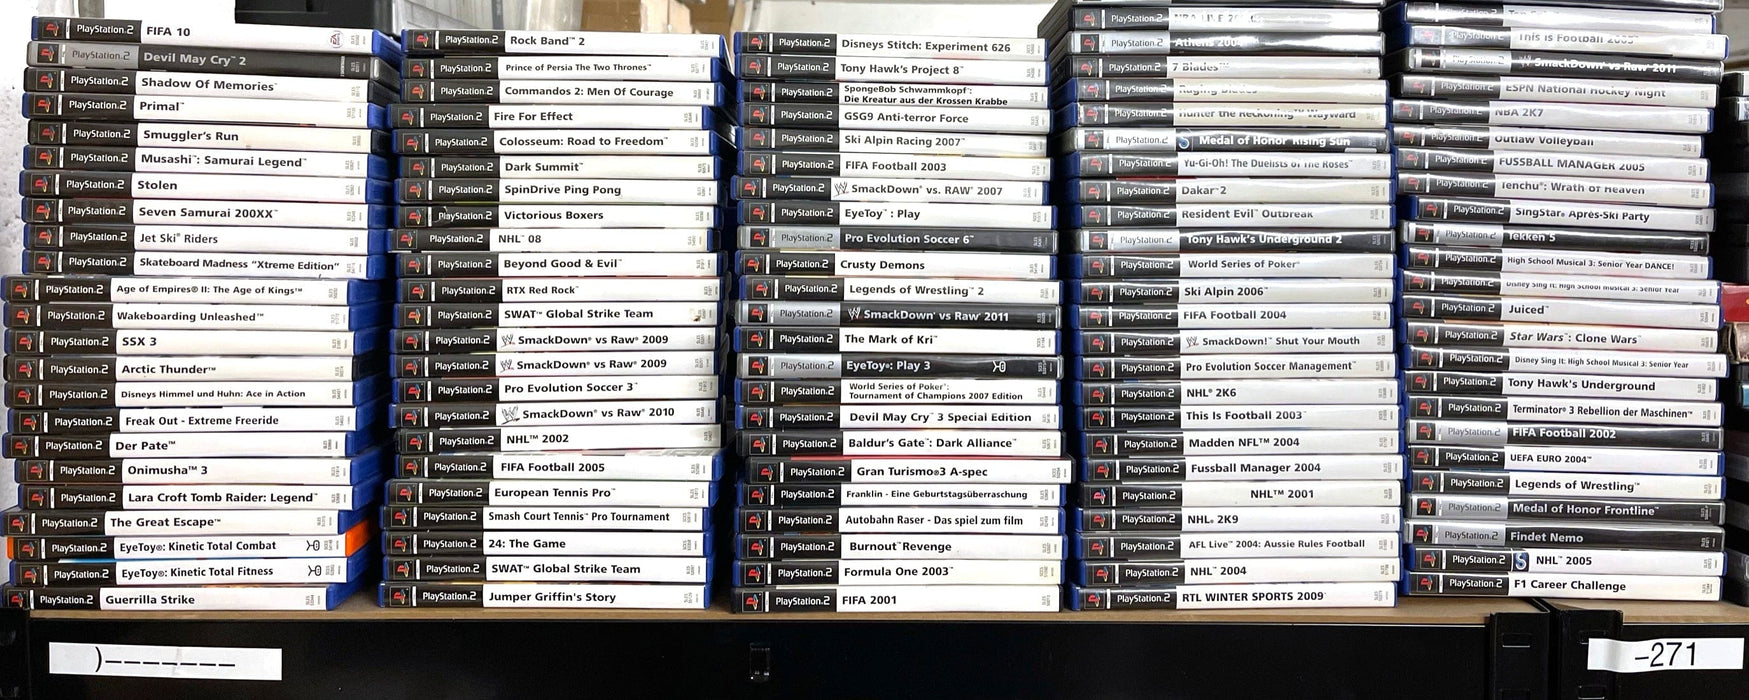 Glaciergames PlayStation 2 Game Der Herr der Ringe - Die zwei Türme PlayStation 2 (Nr.778)